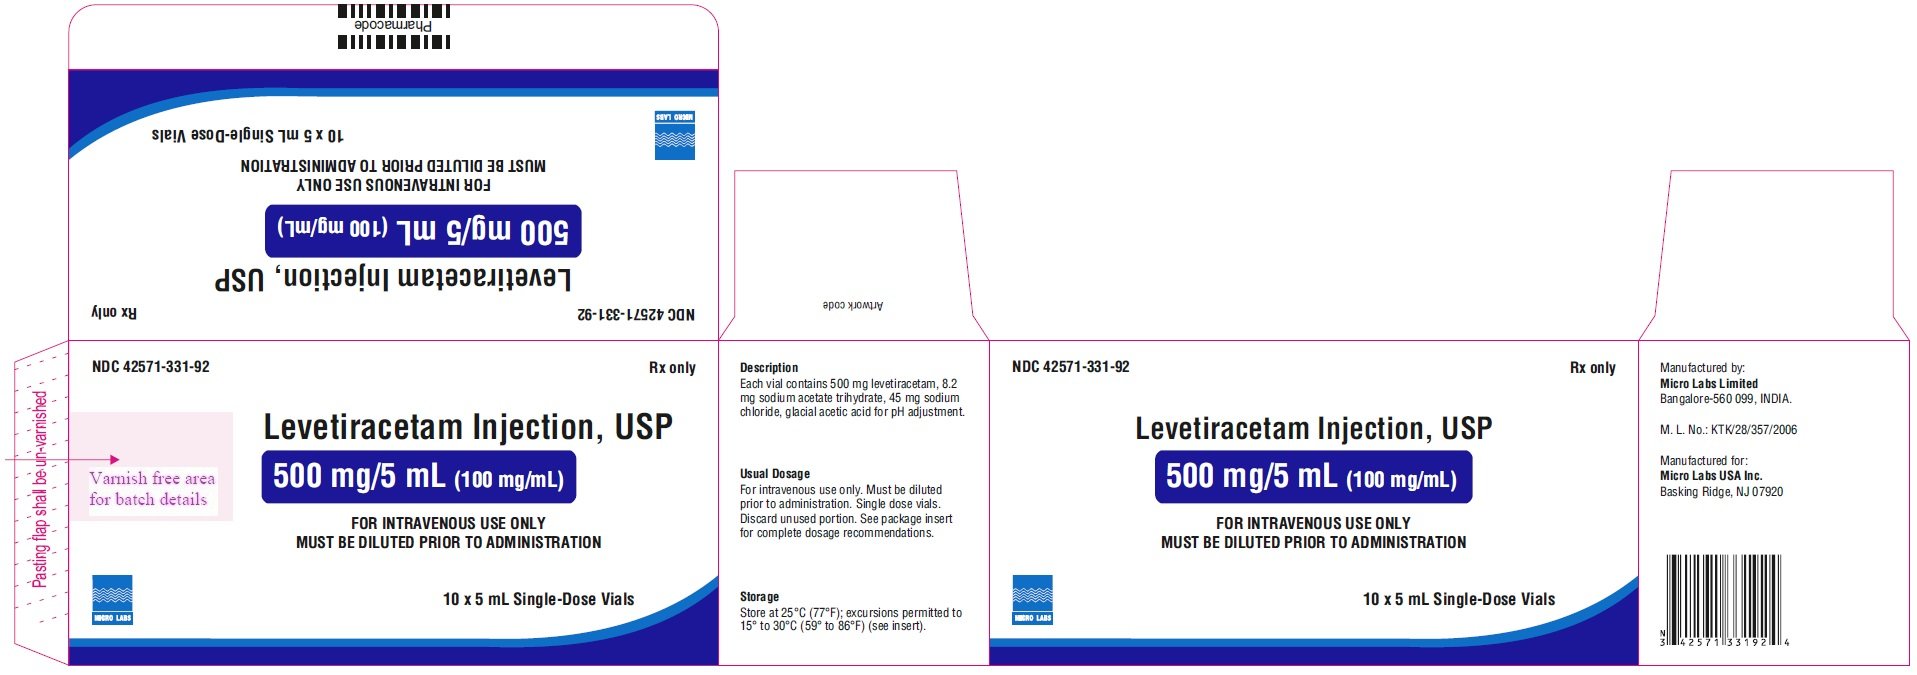 Levetiracetam Ati Medication Template